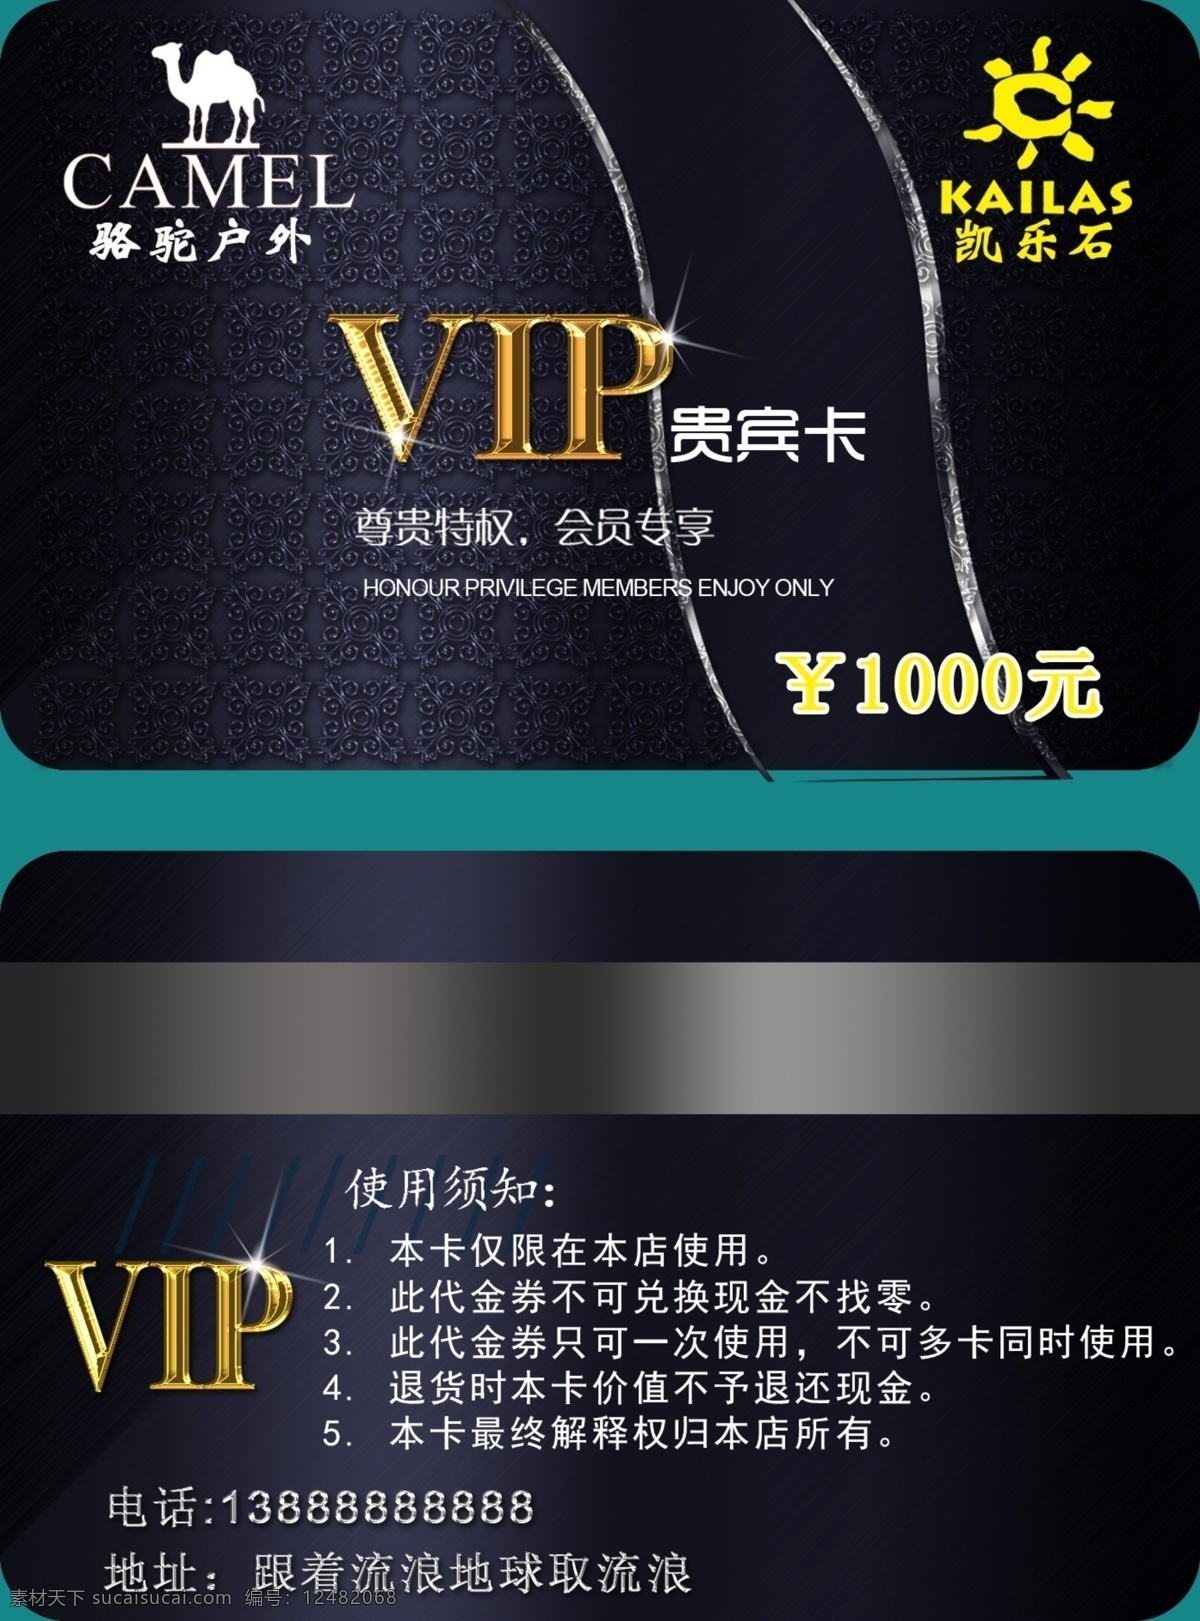 vip卡 代金券 暗色背景 vip 卡 名片 室内广告设计